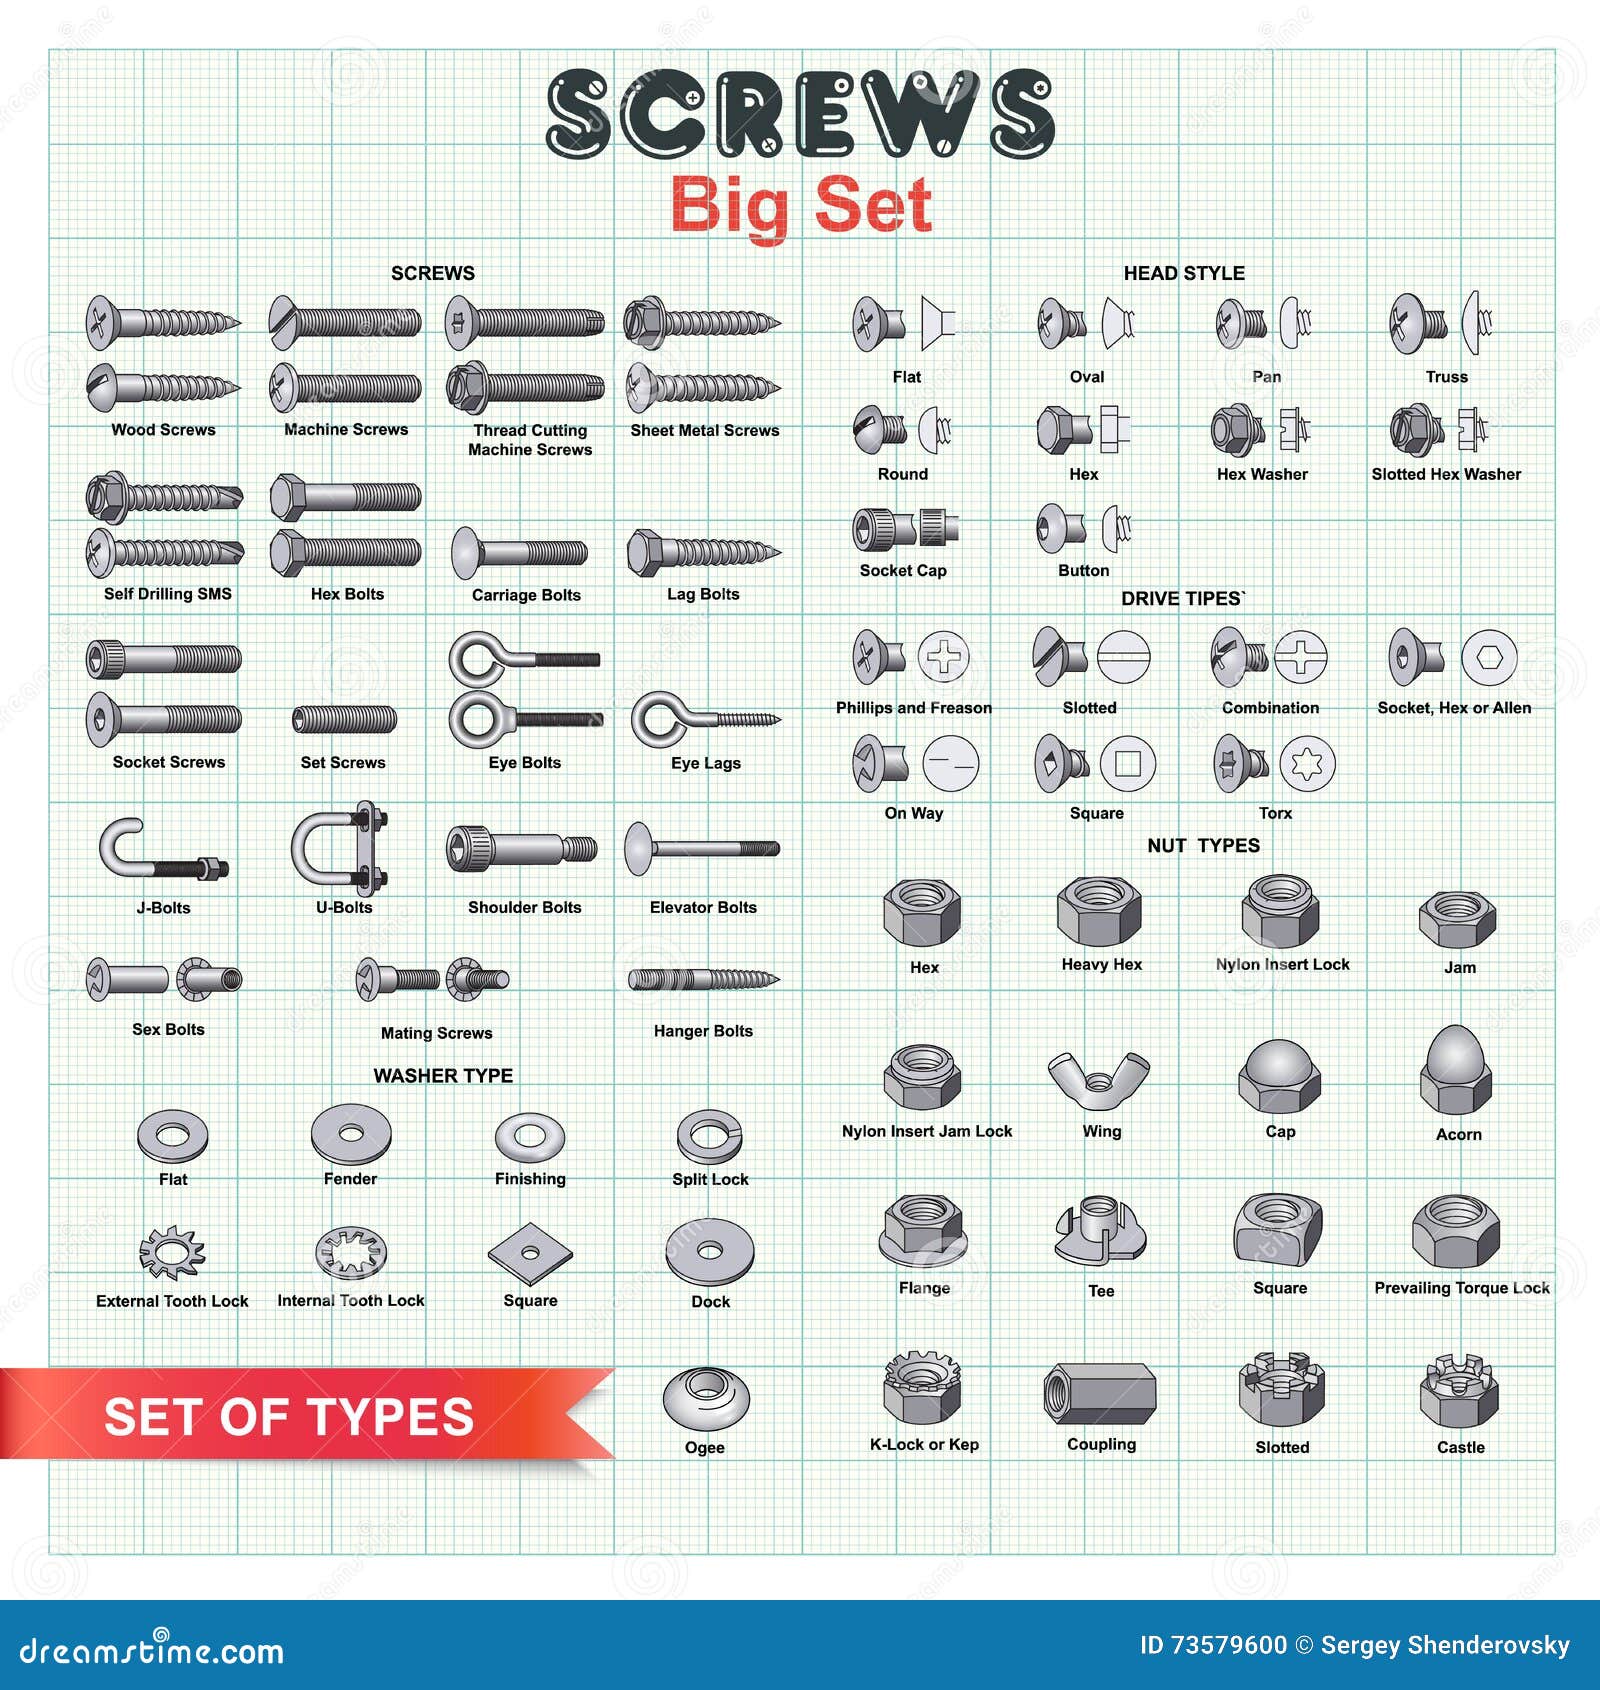 screws big set